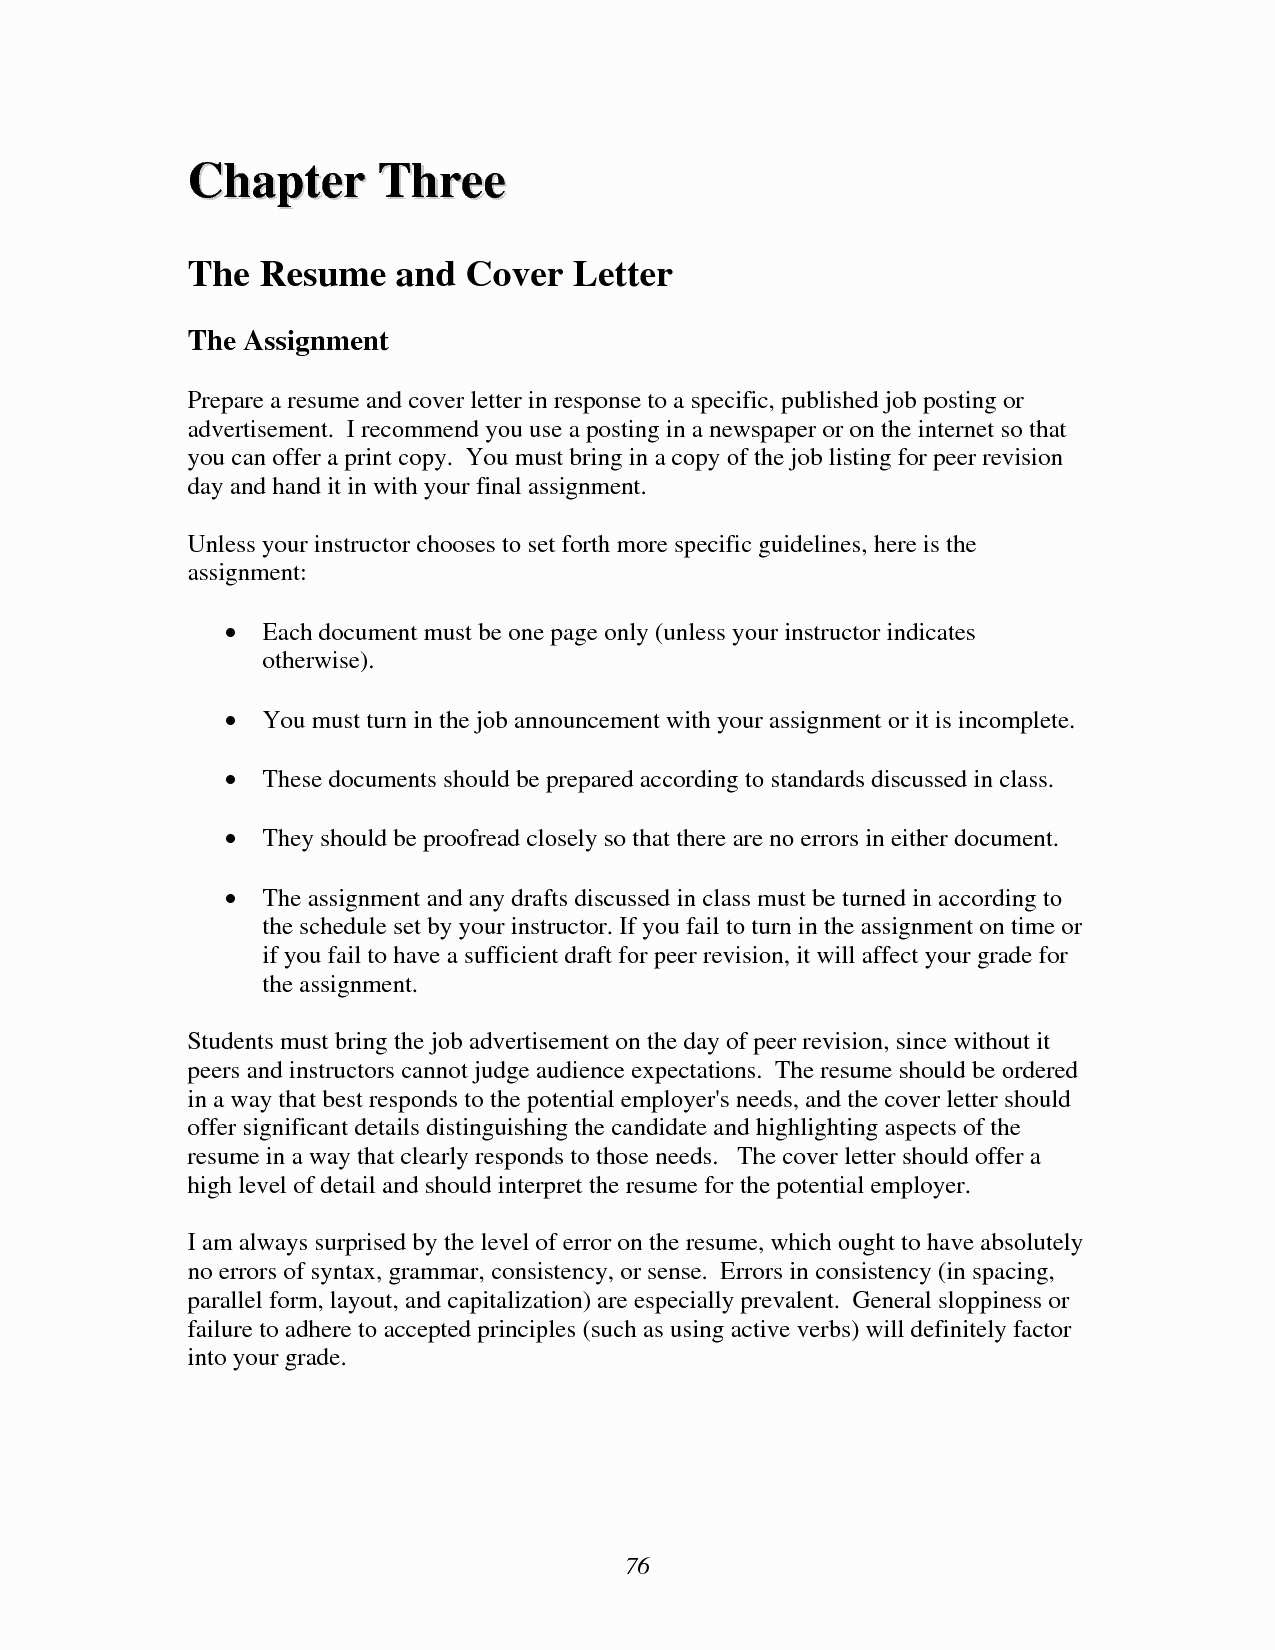 Sample Hire Letter Template - Job Fer Letter Template Us Copy Od Consultant Cover Letter Fungram